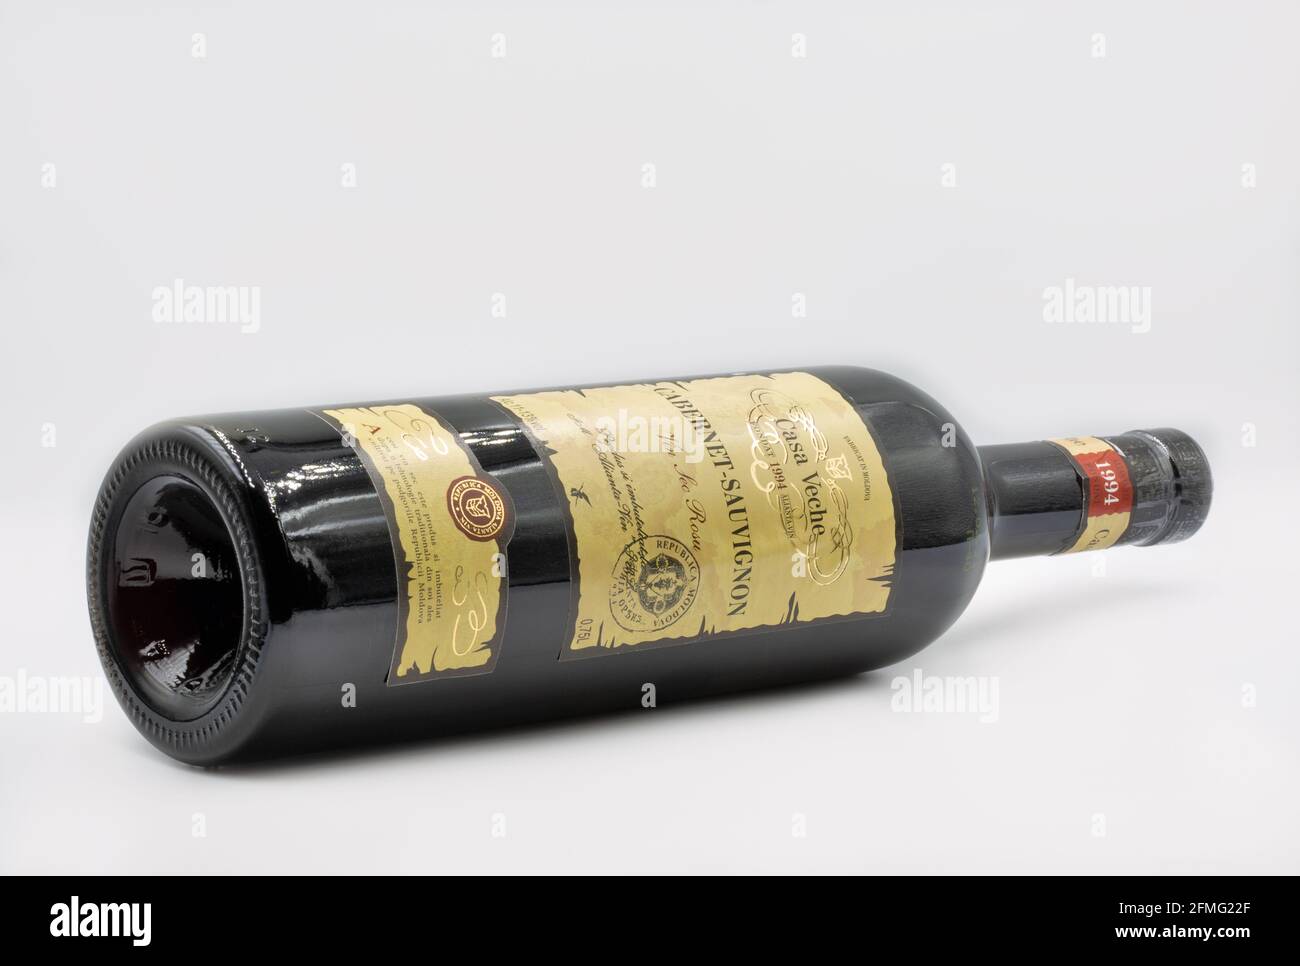 KYIV, UKRAINE - FEBRUARY 27, 2021: Cabernet Sauvignon red wine bottle from Casa Veche Moldavian winery closeup against white background. Stock Photo